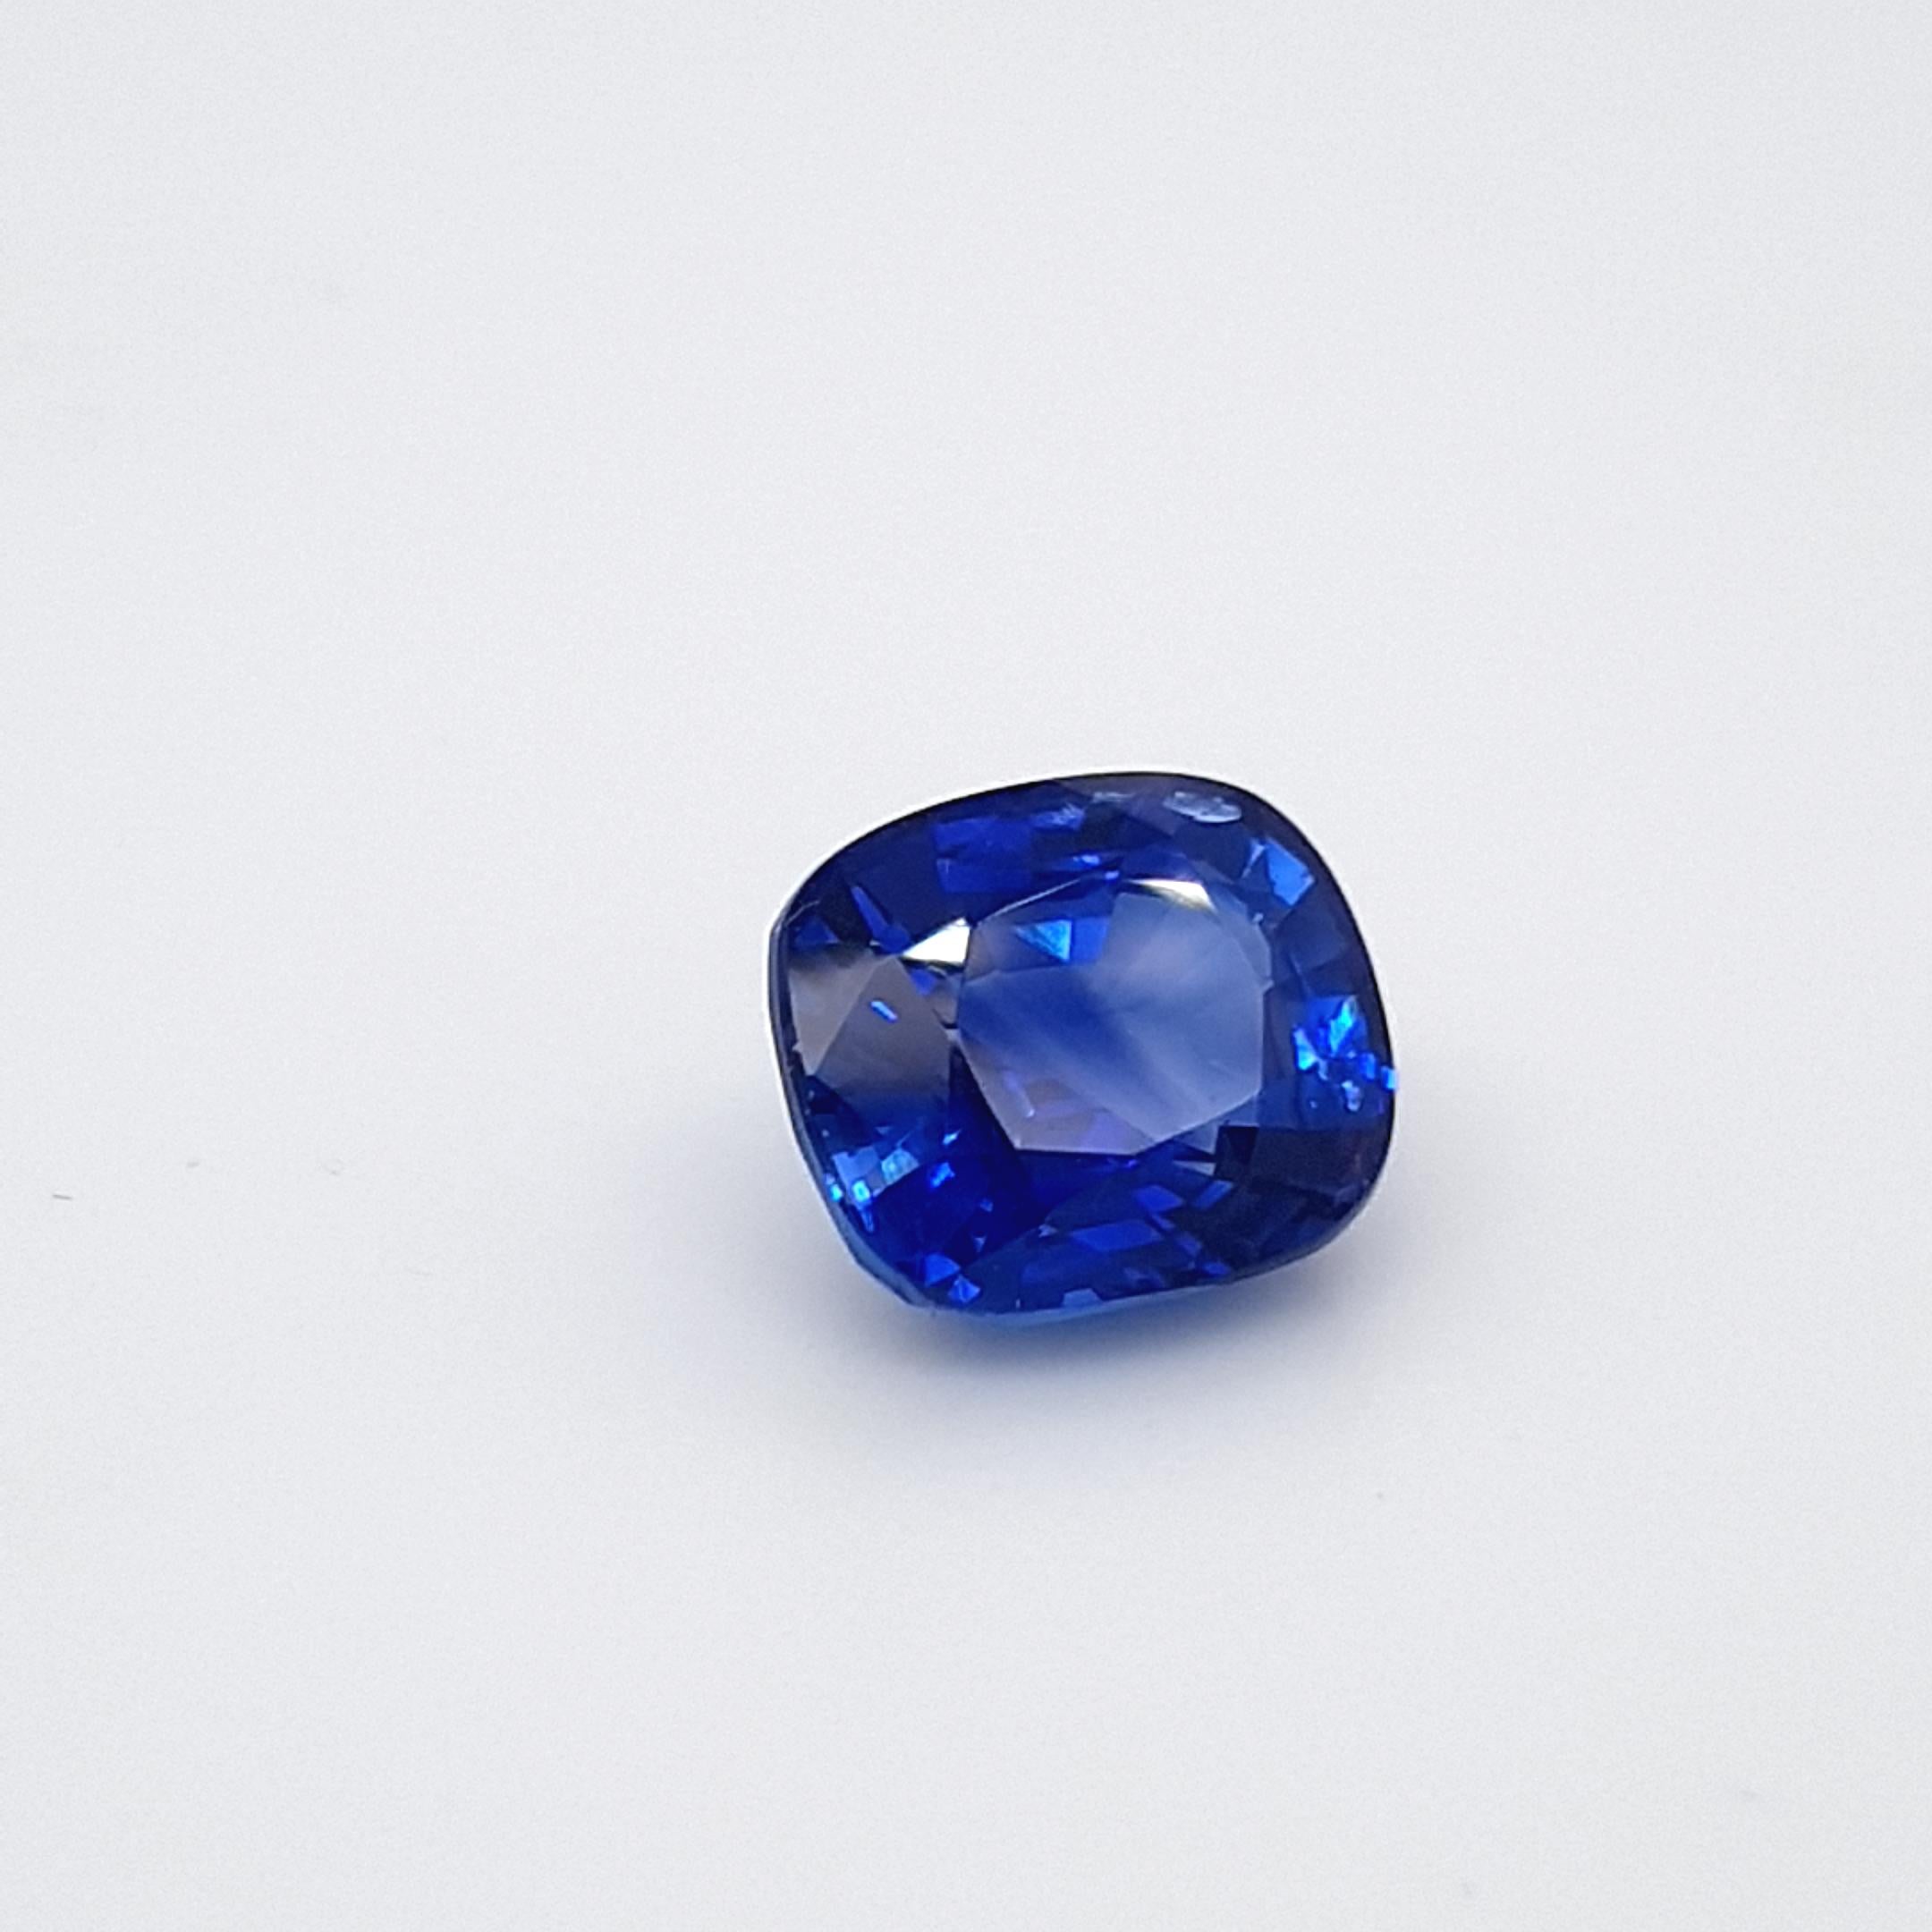 Contemporary Deep Blue Sapphire, Certified Gem, 4, 27 Ct., Loose Gemstone For Sale